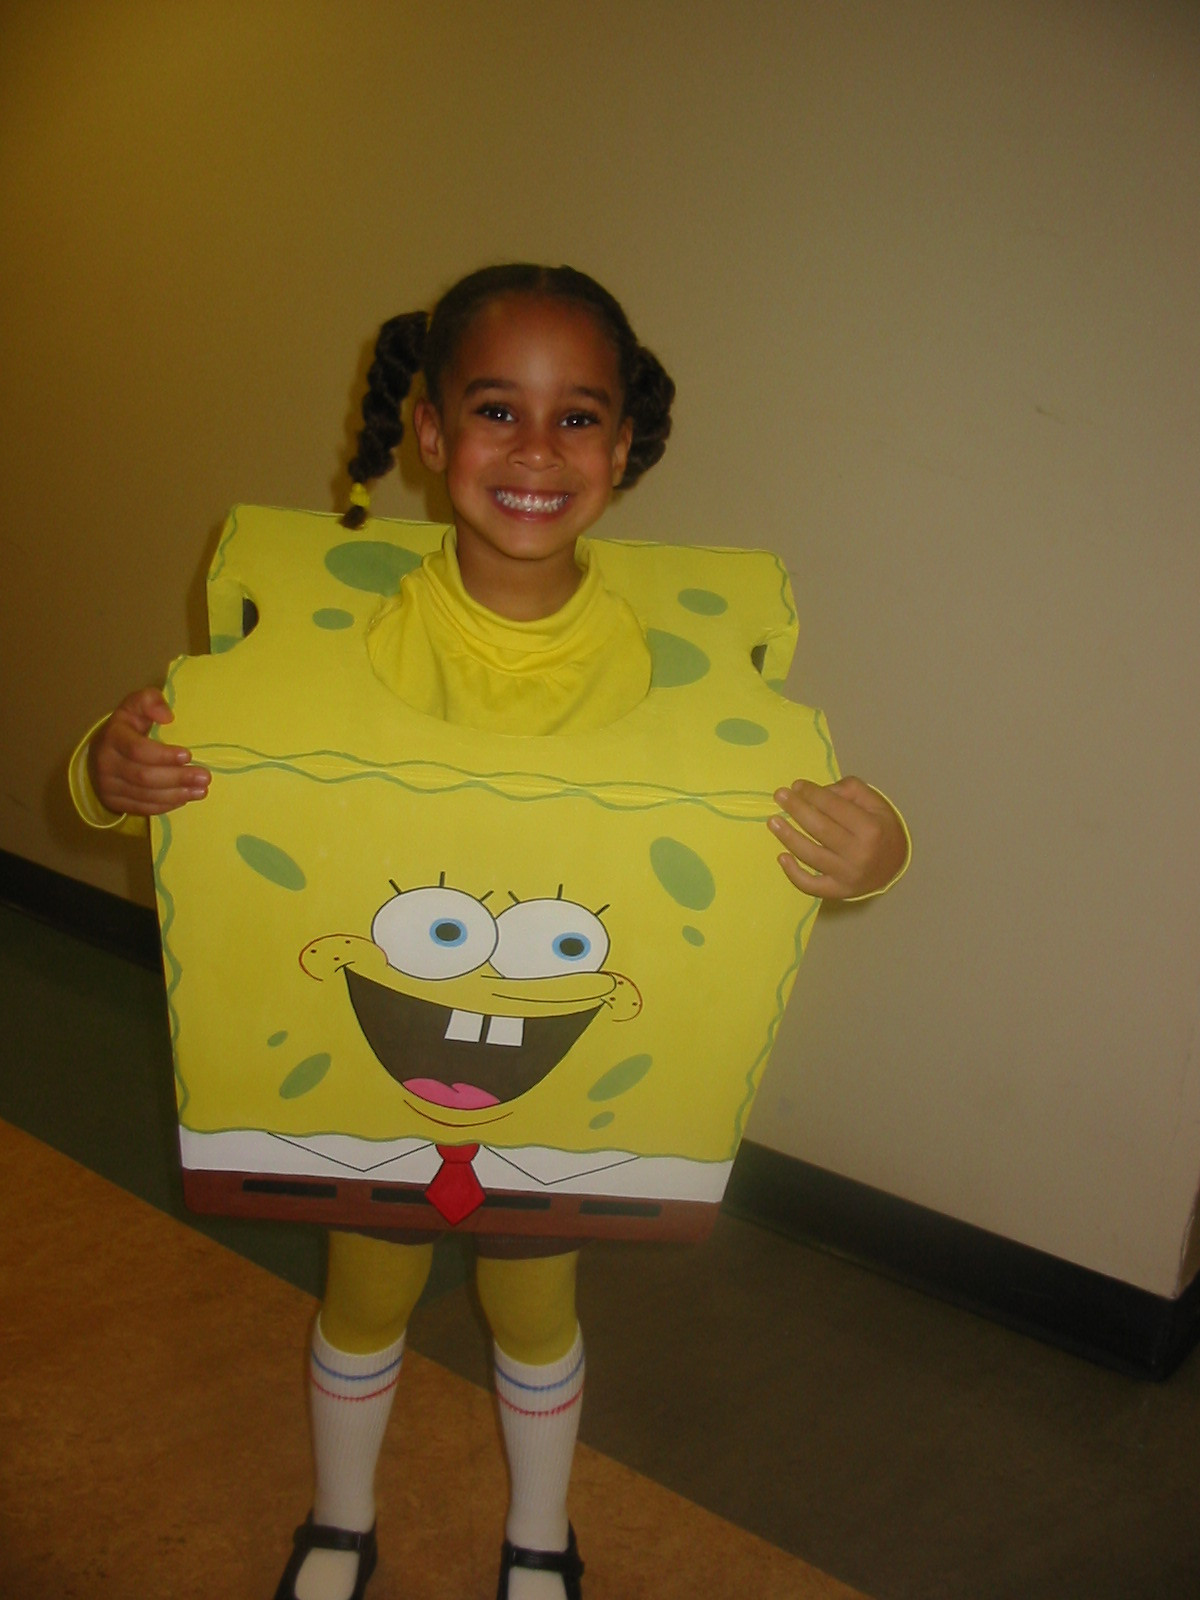 Best ideas about DIY Cartoon Costume
. Save or Pin Spongebob Squarepants costume Look just like the cartoon Now.